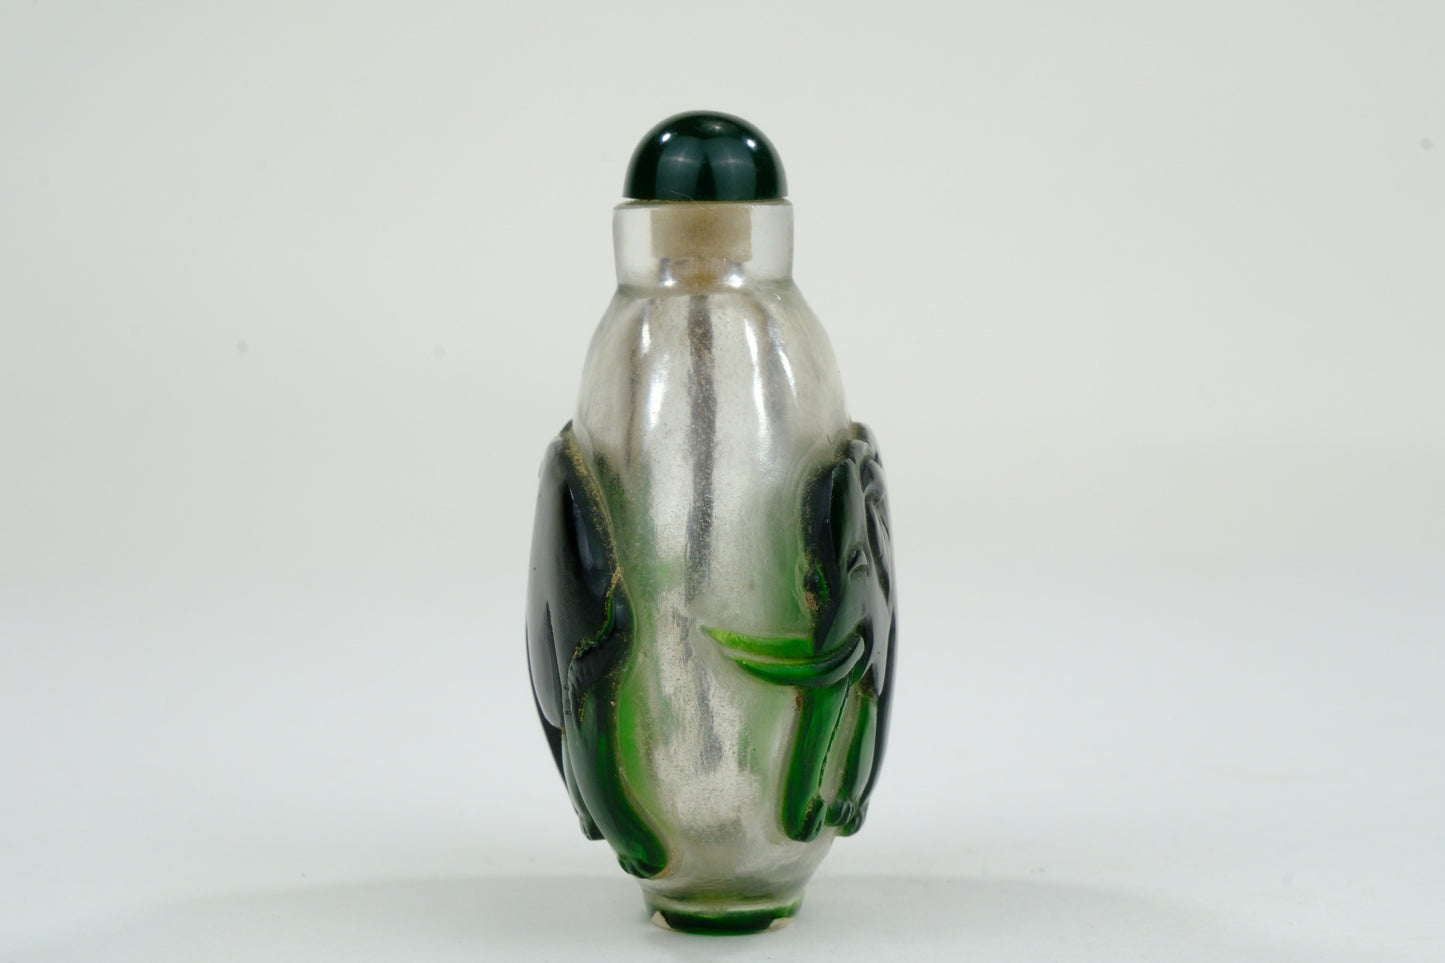 Vintage Chinese Glass Snuff Bottle Elephant Motif 3"